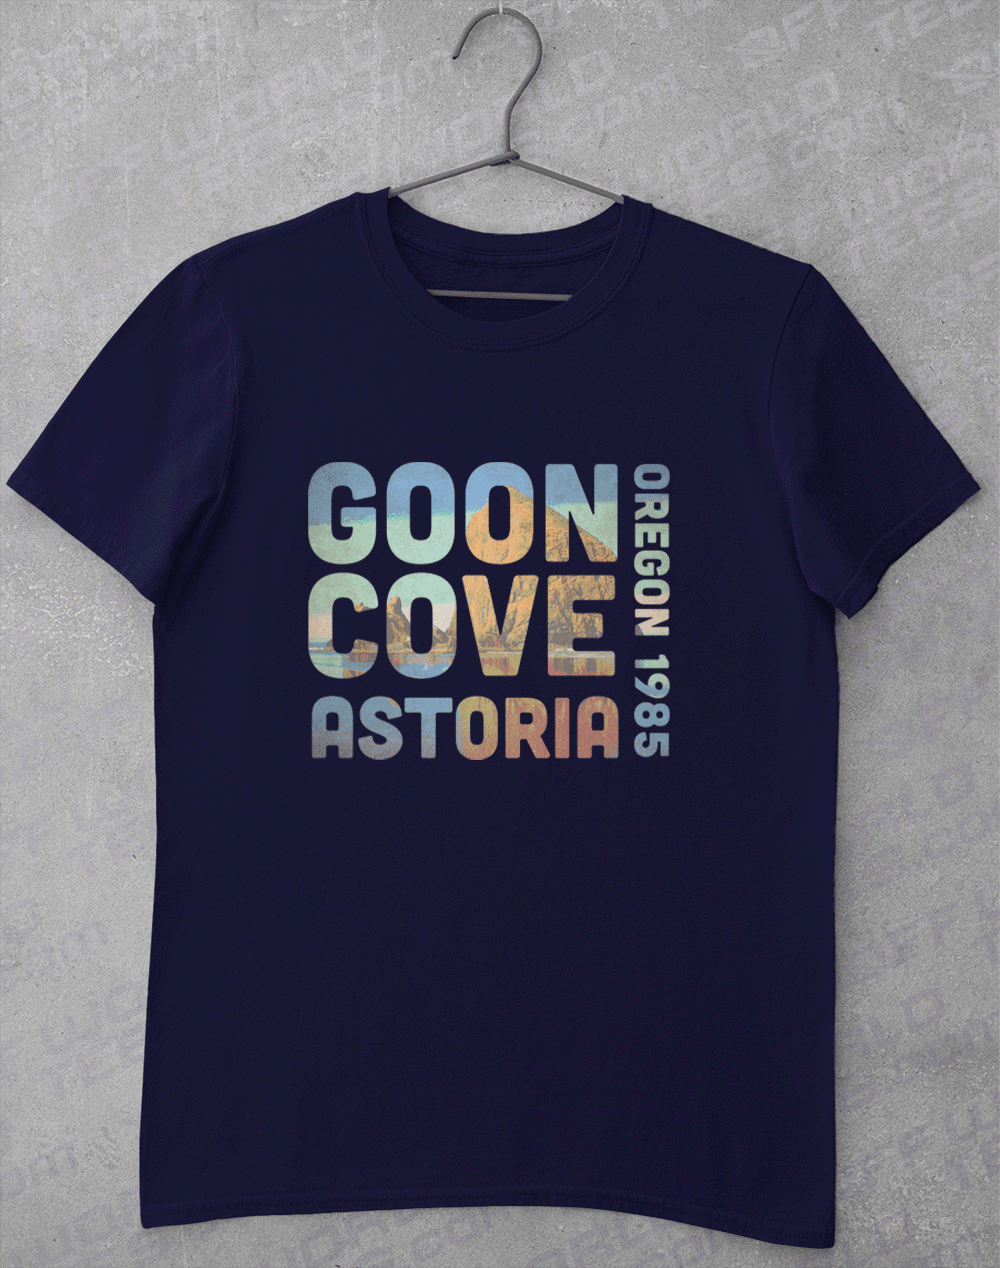 Goon Cove 1985 T-Shirt S / Navy  - Off World Tees